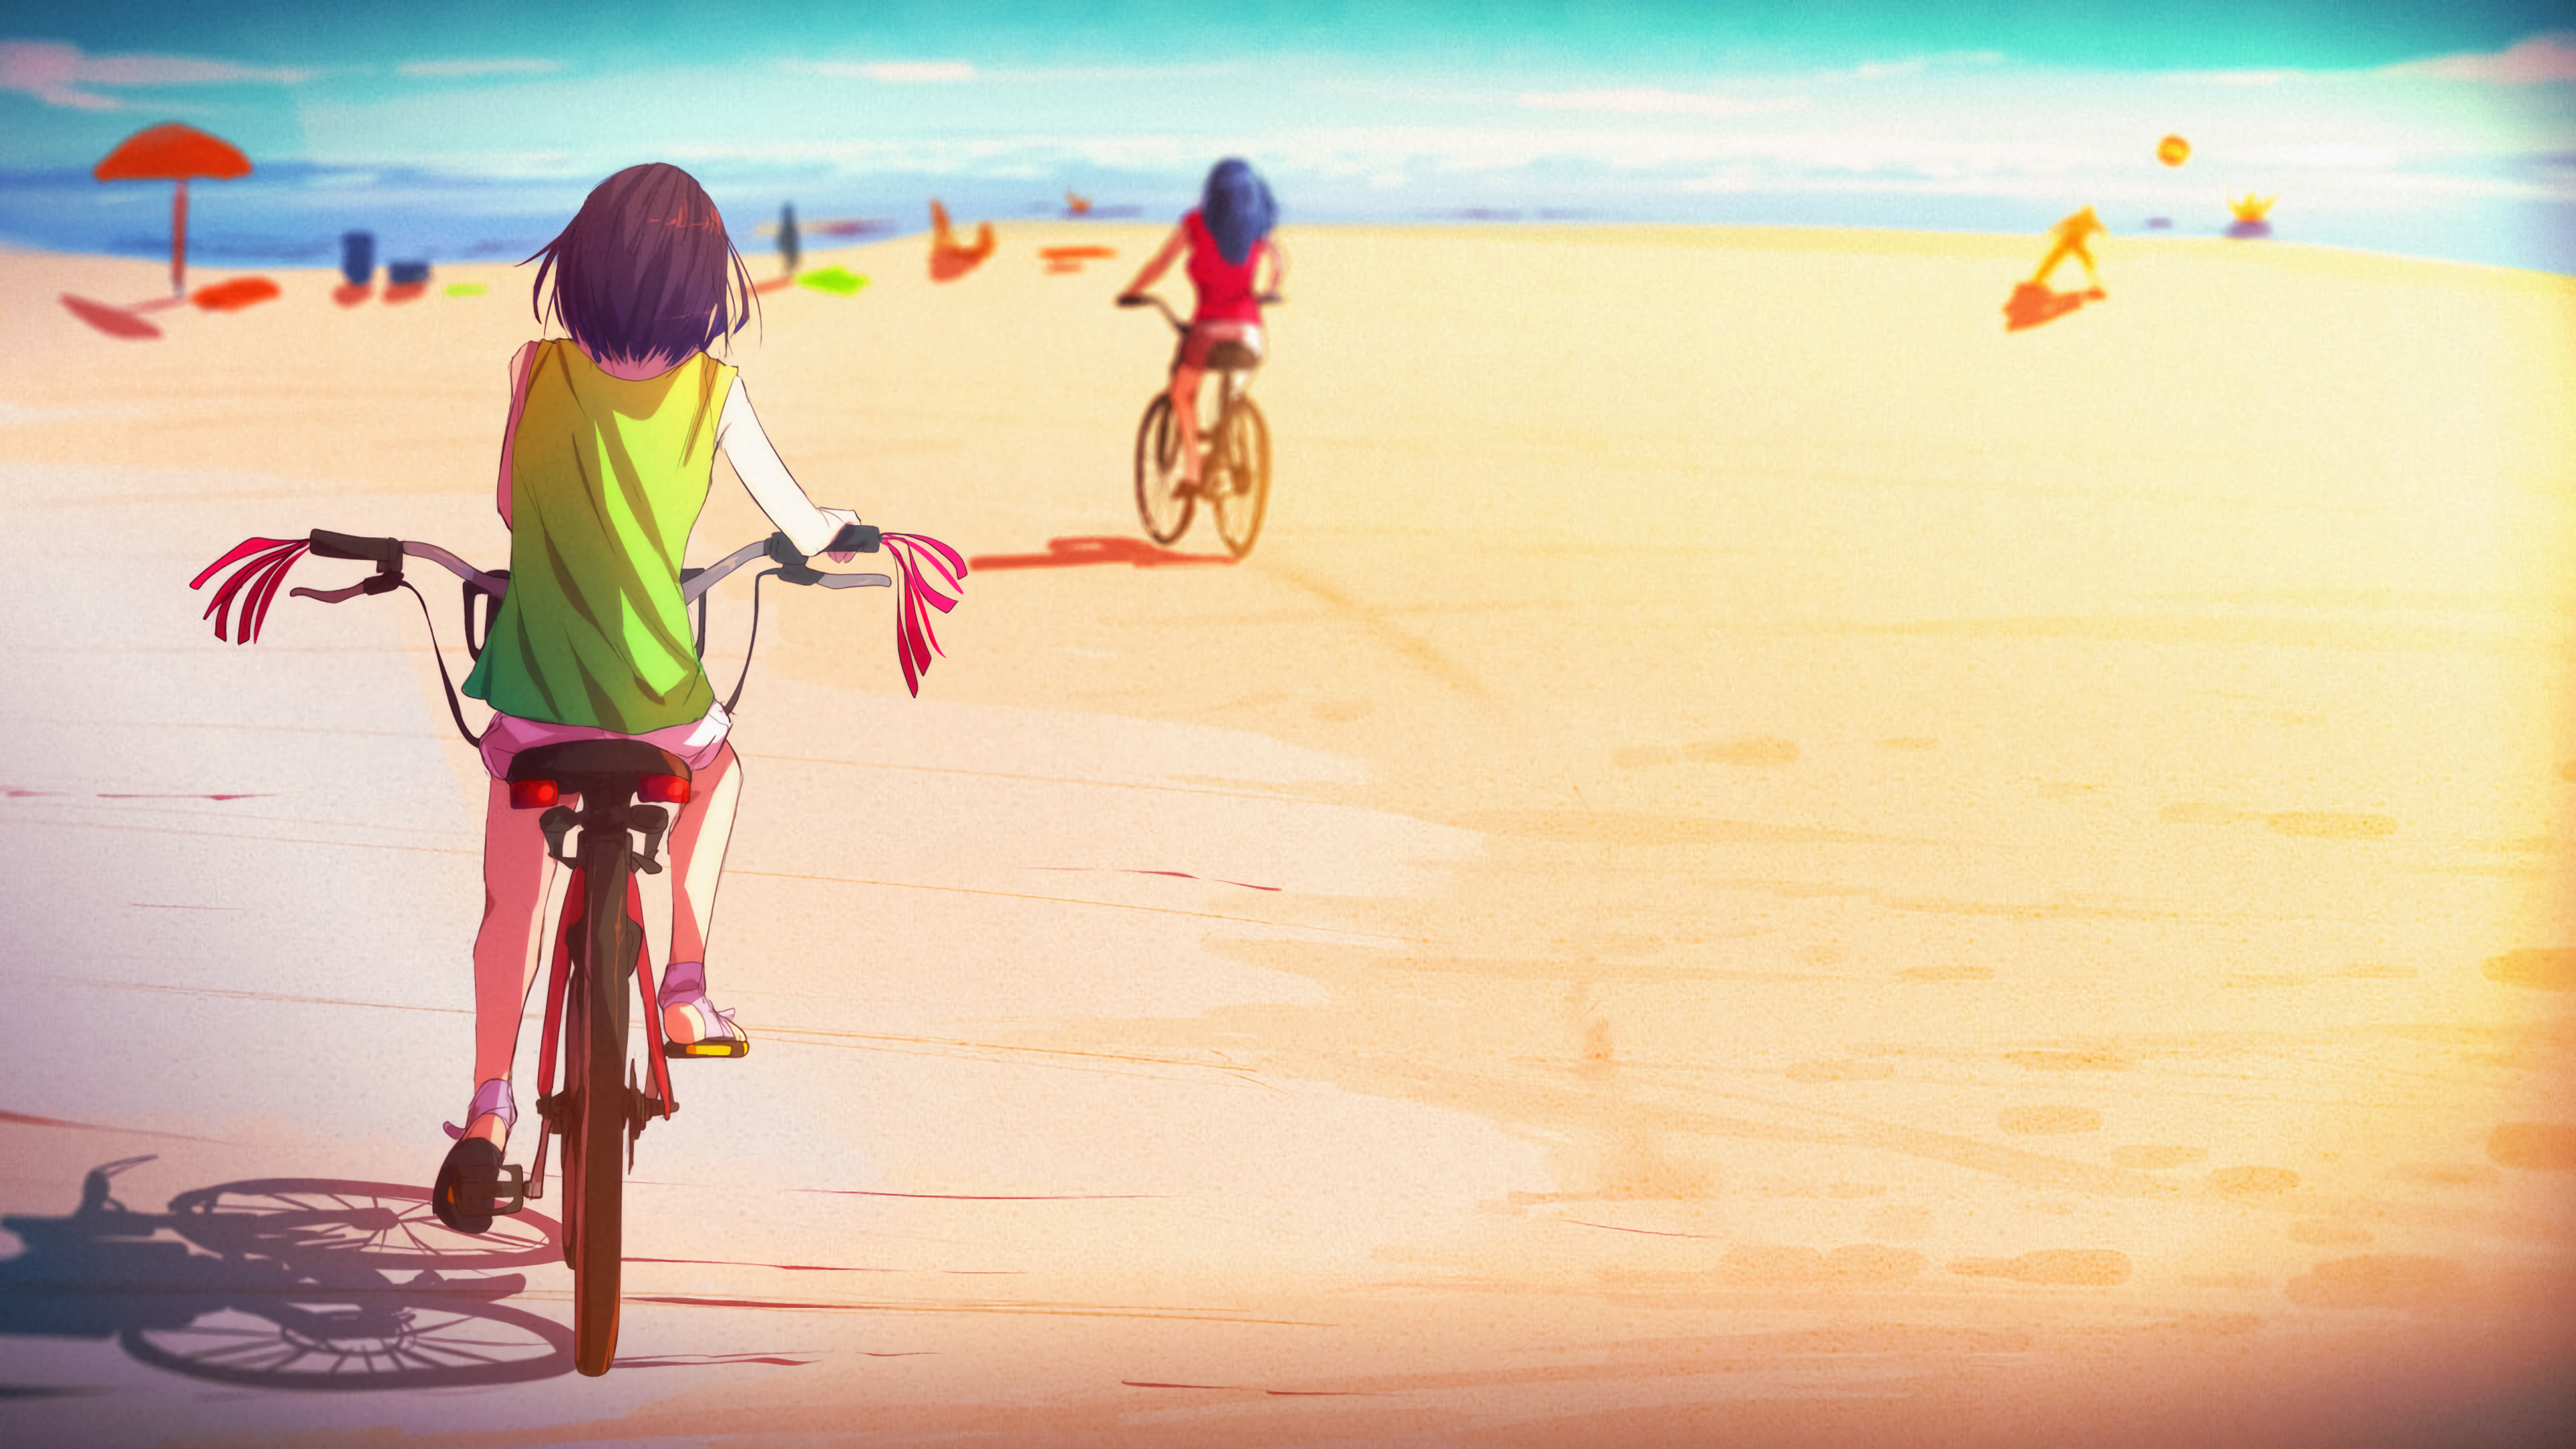 Anime 3840x2160 Tom Skender anime girls anime DeviantArt bicycle beach sand water sunlight shadow clouds sky